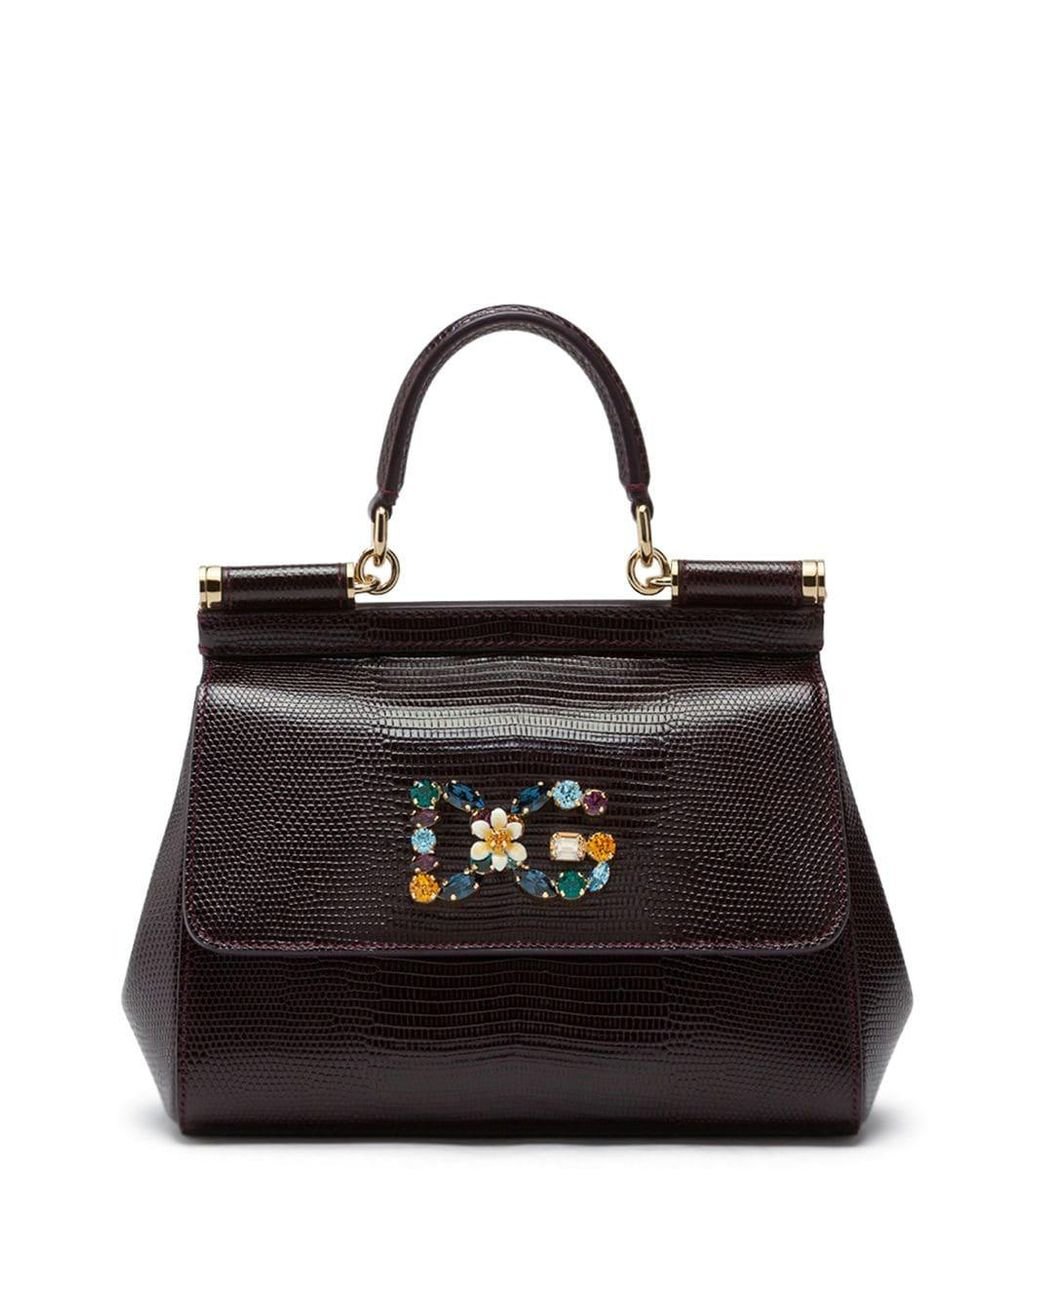 Dolce&Gabbana® Sicily Bags: mini, small, medium & large | D&G®